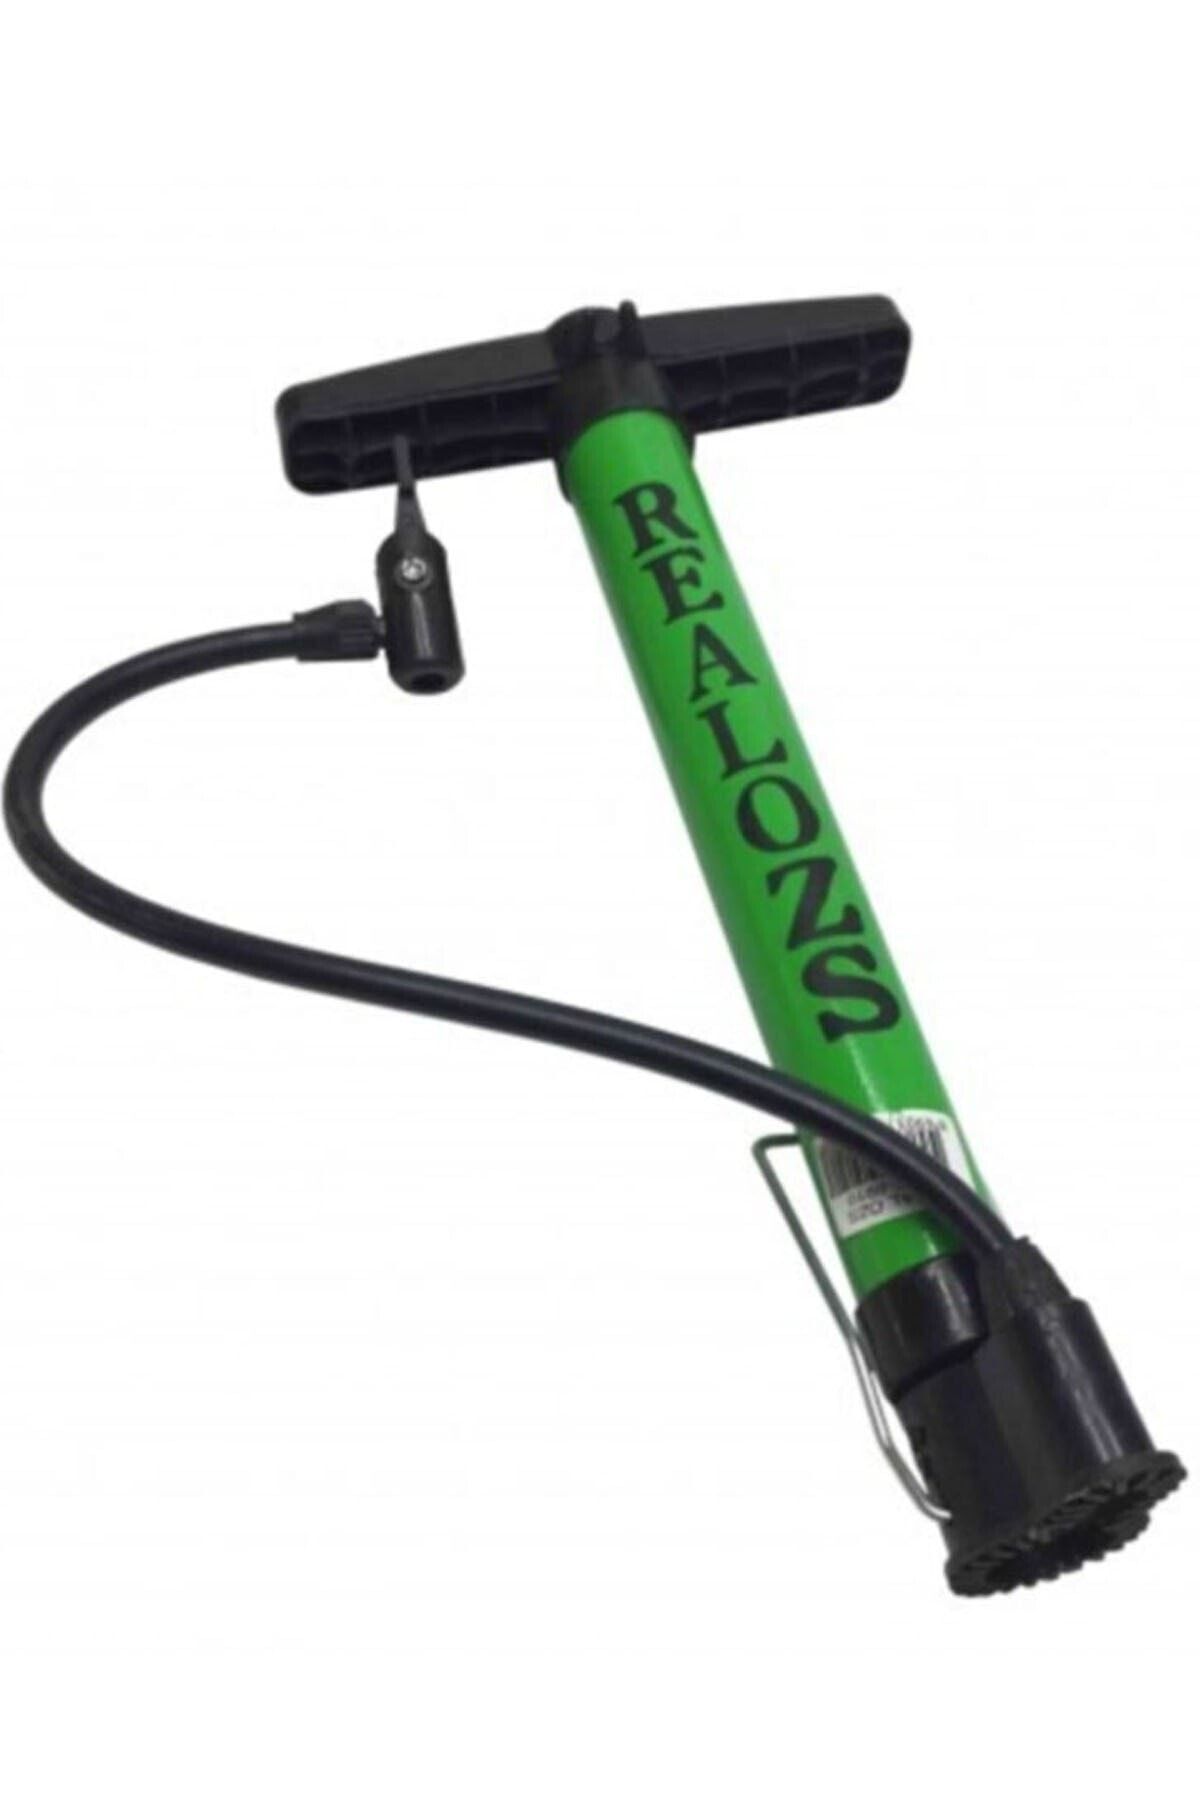 Markafox Real Özs 8910 Bisiklet Pompası Motorsiklet Pompası Lastik Şişirme Pompası El Pompası 1410